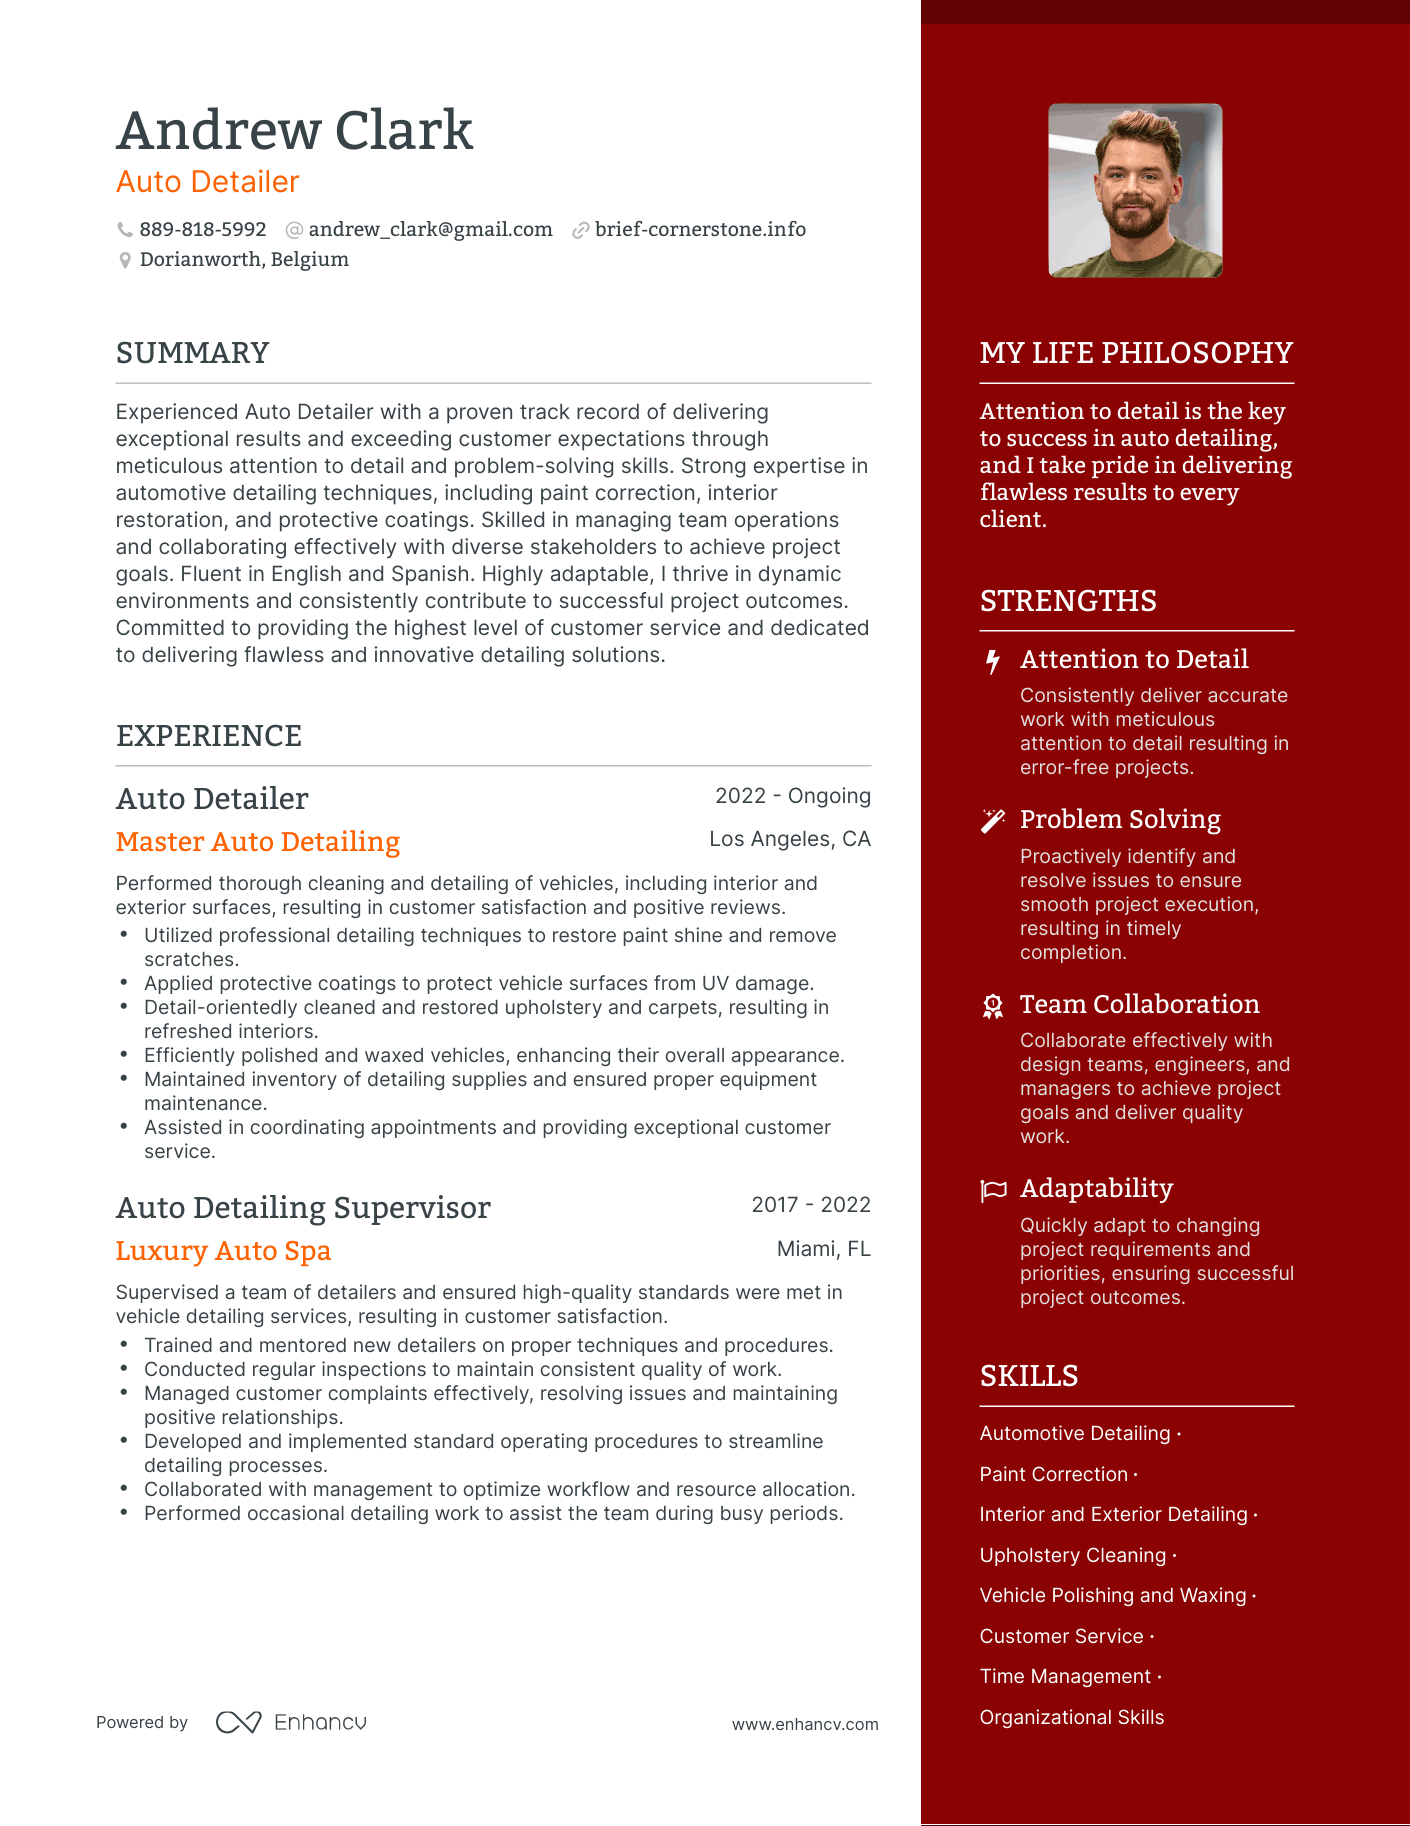 Auto Detailer resume example